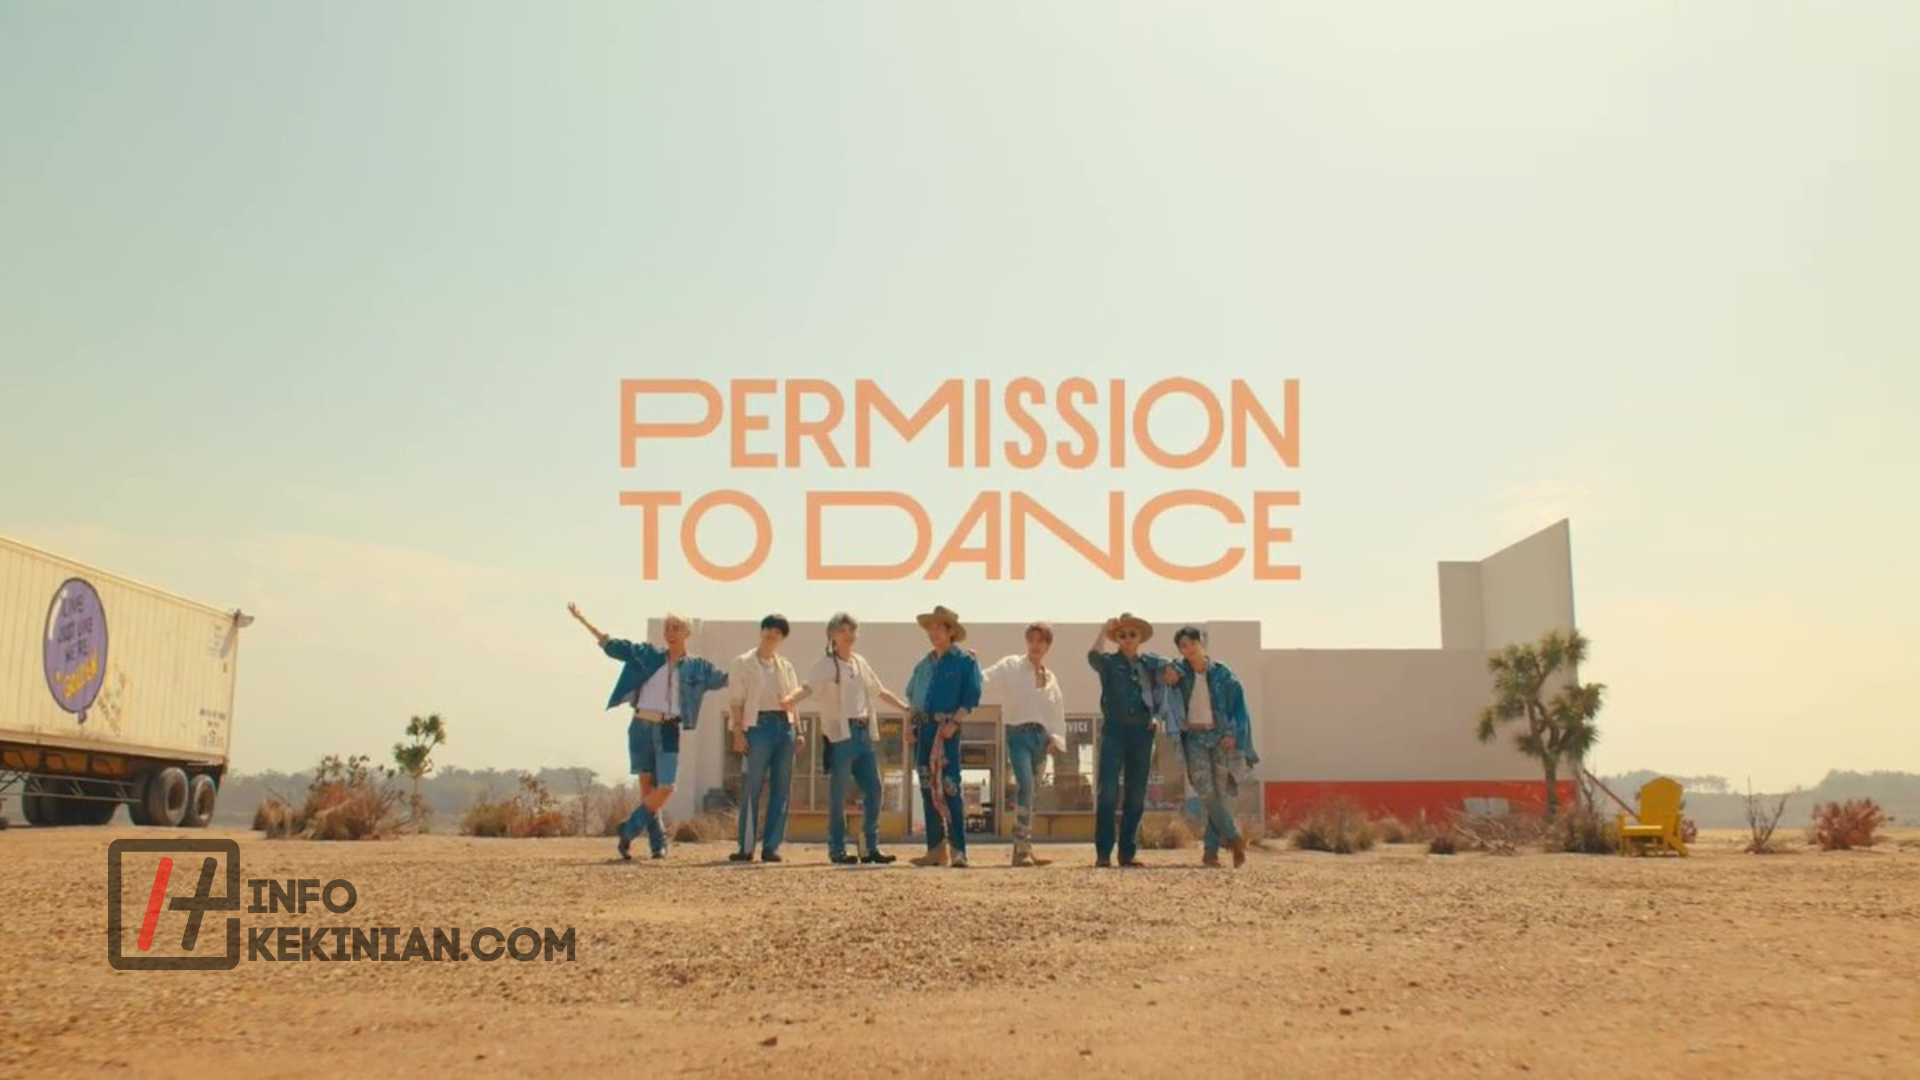 Lirik permission to dance